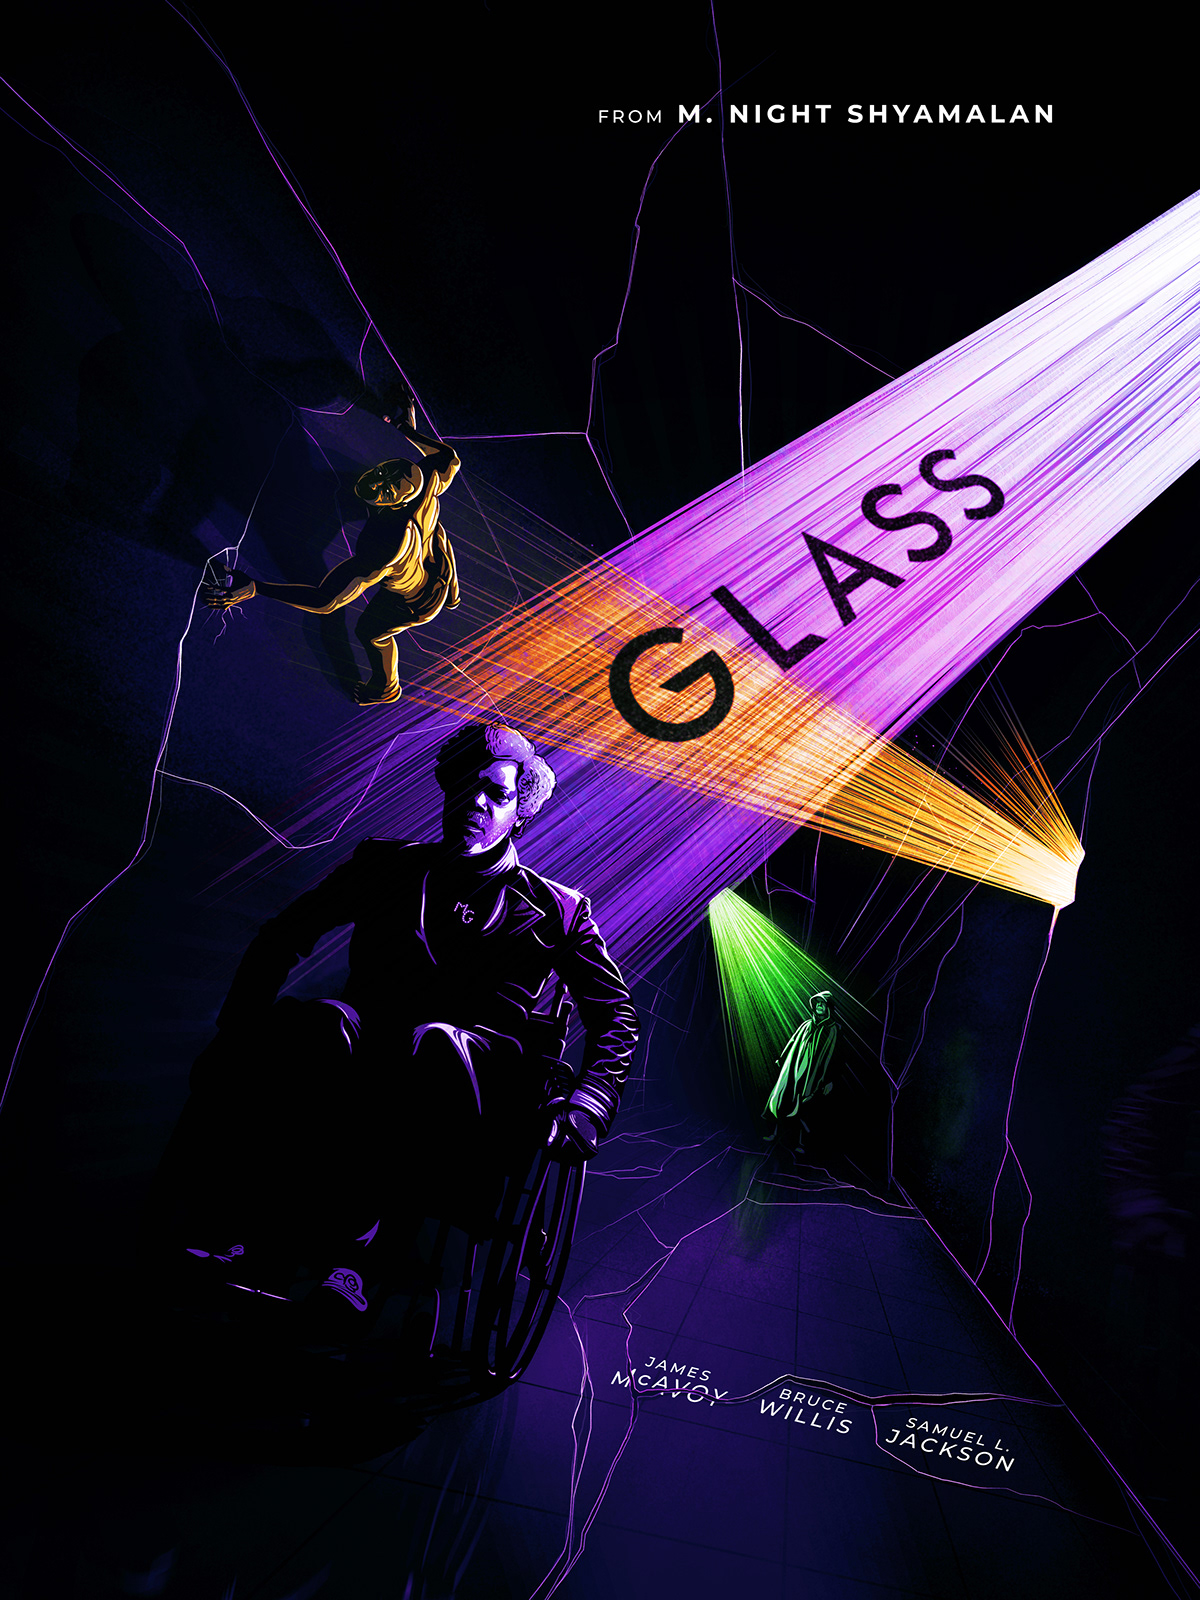 glass unbreakable split movie SuperHero comics ILLUSTRATION  screen print poster M Night Shyamalan